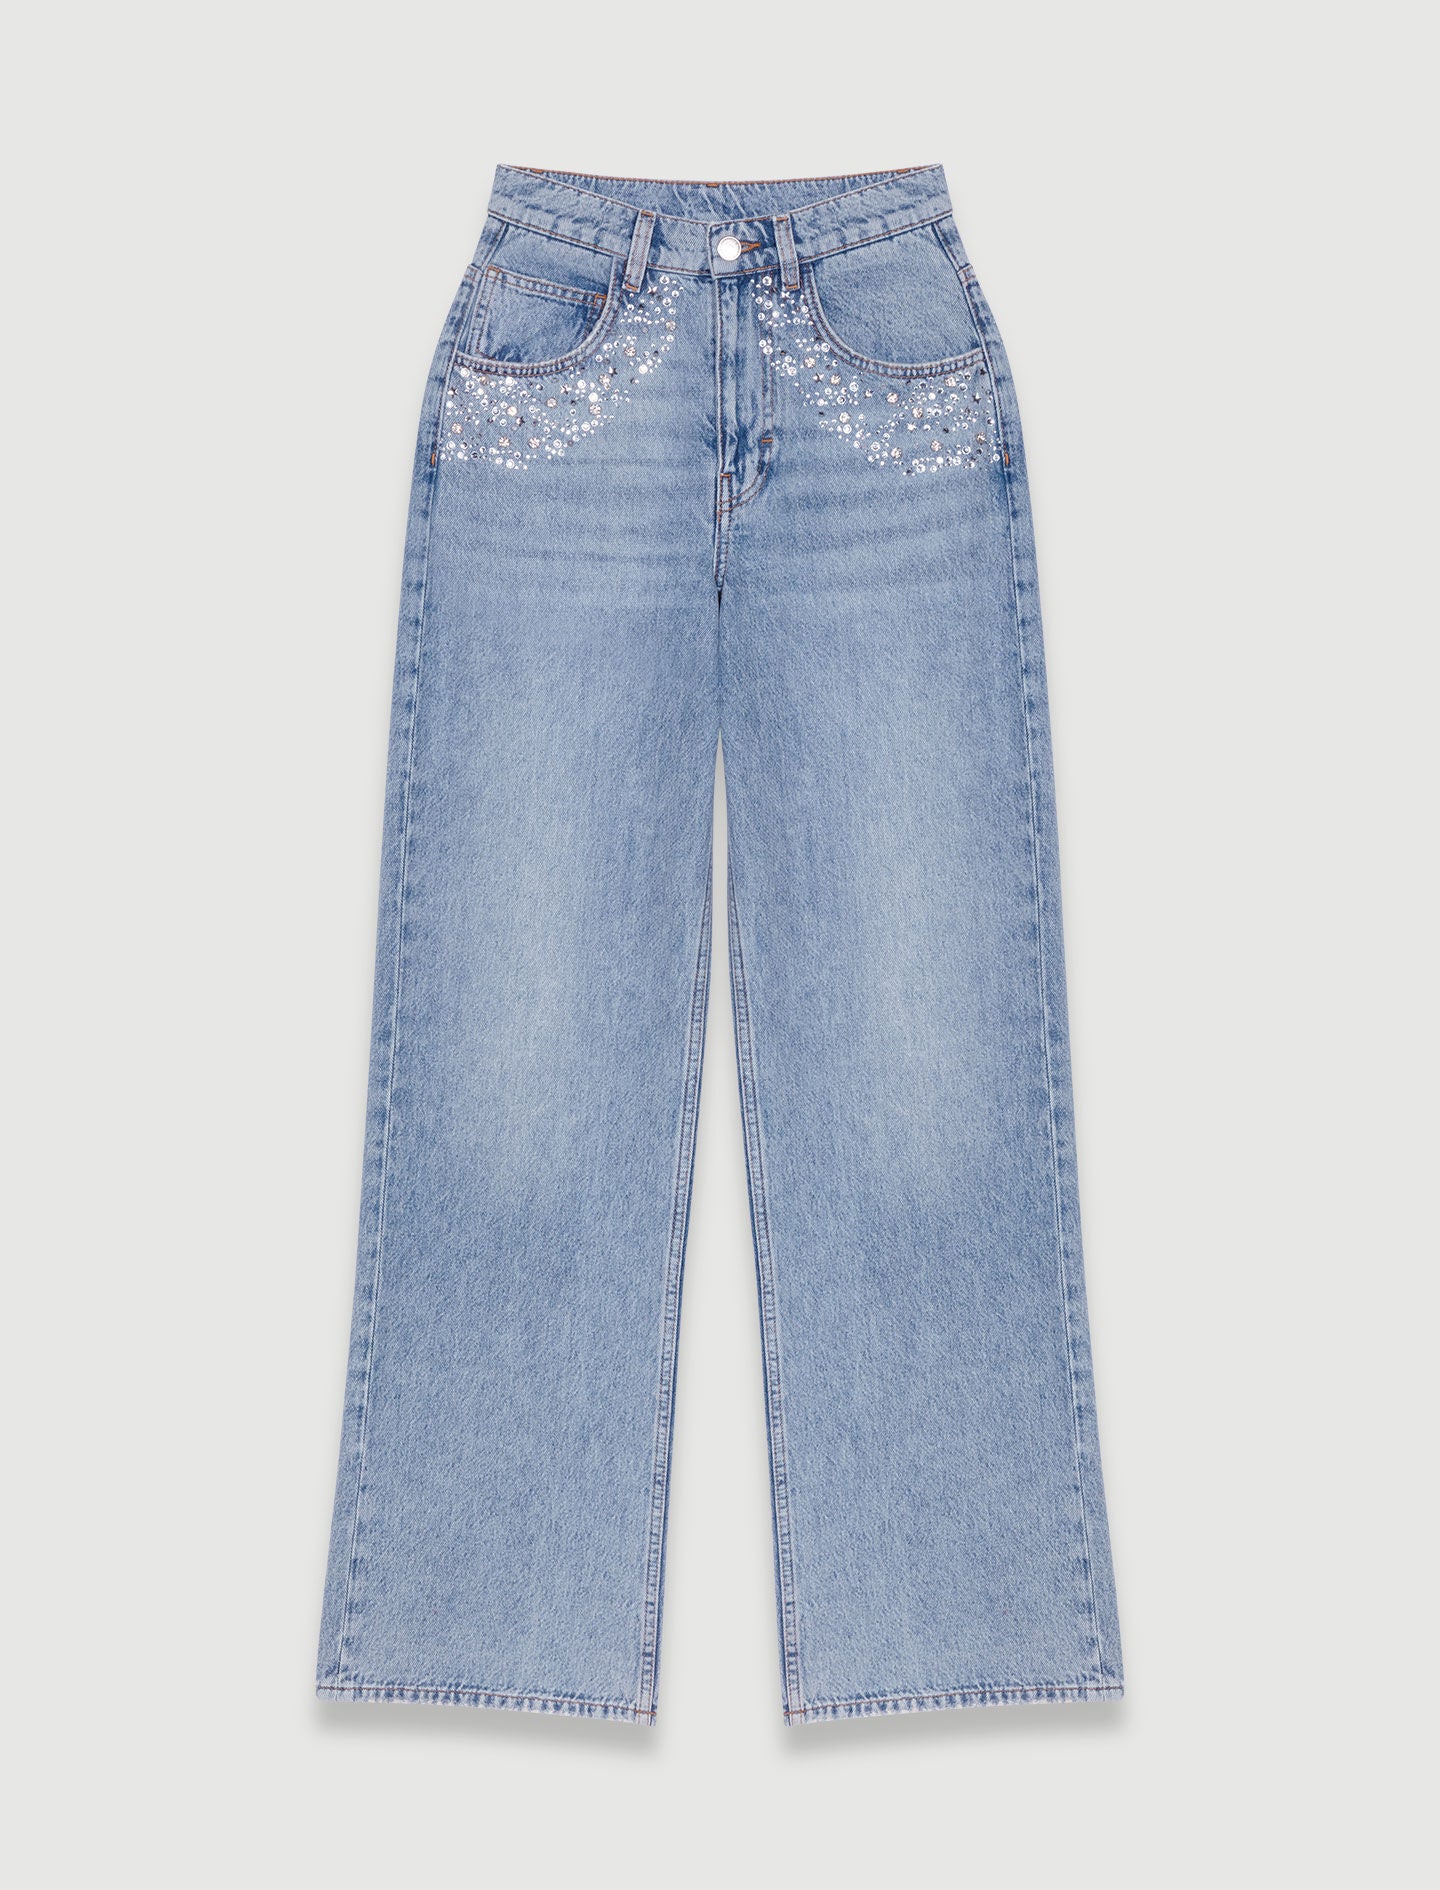 Blue-straight-leg jeans with rhinestones